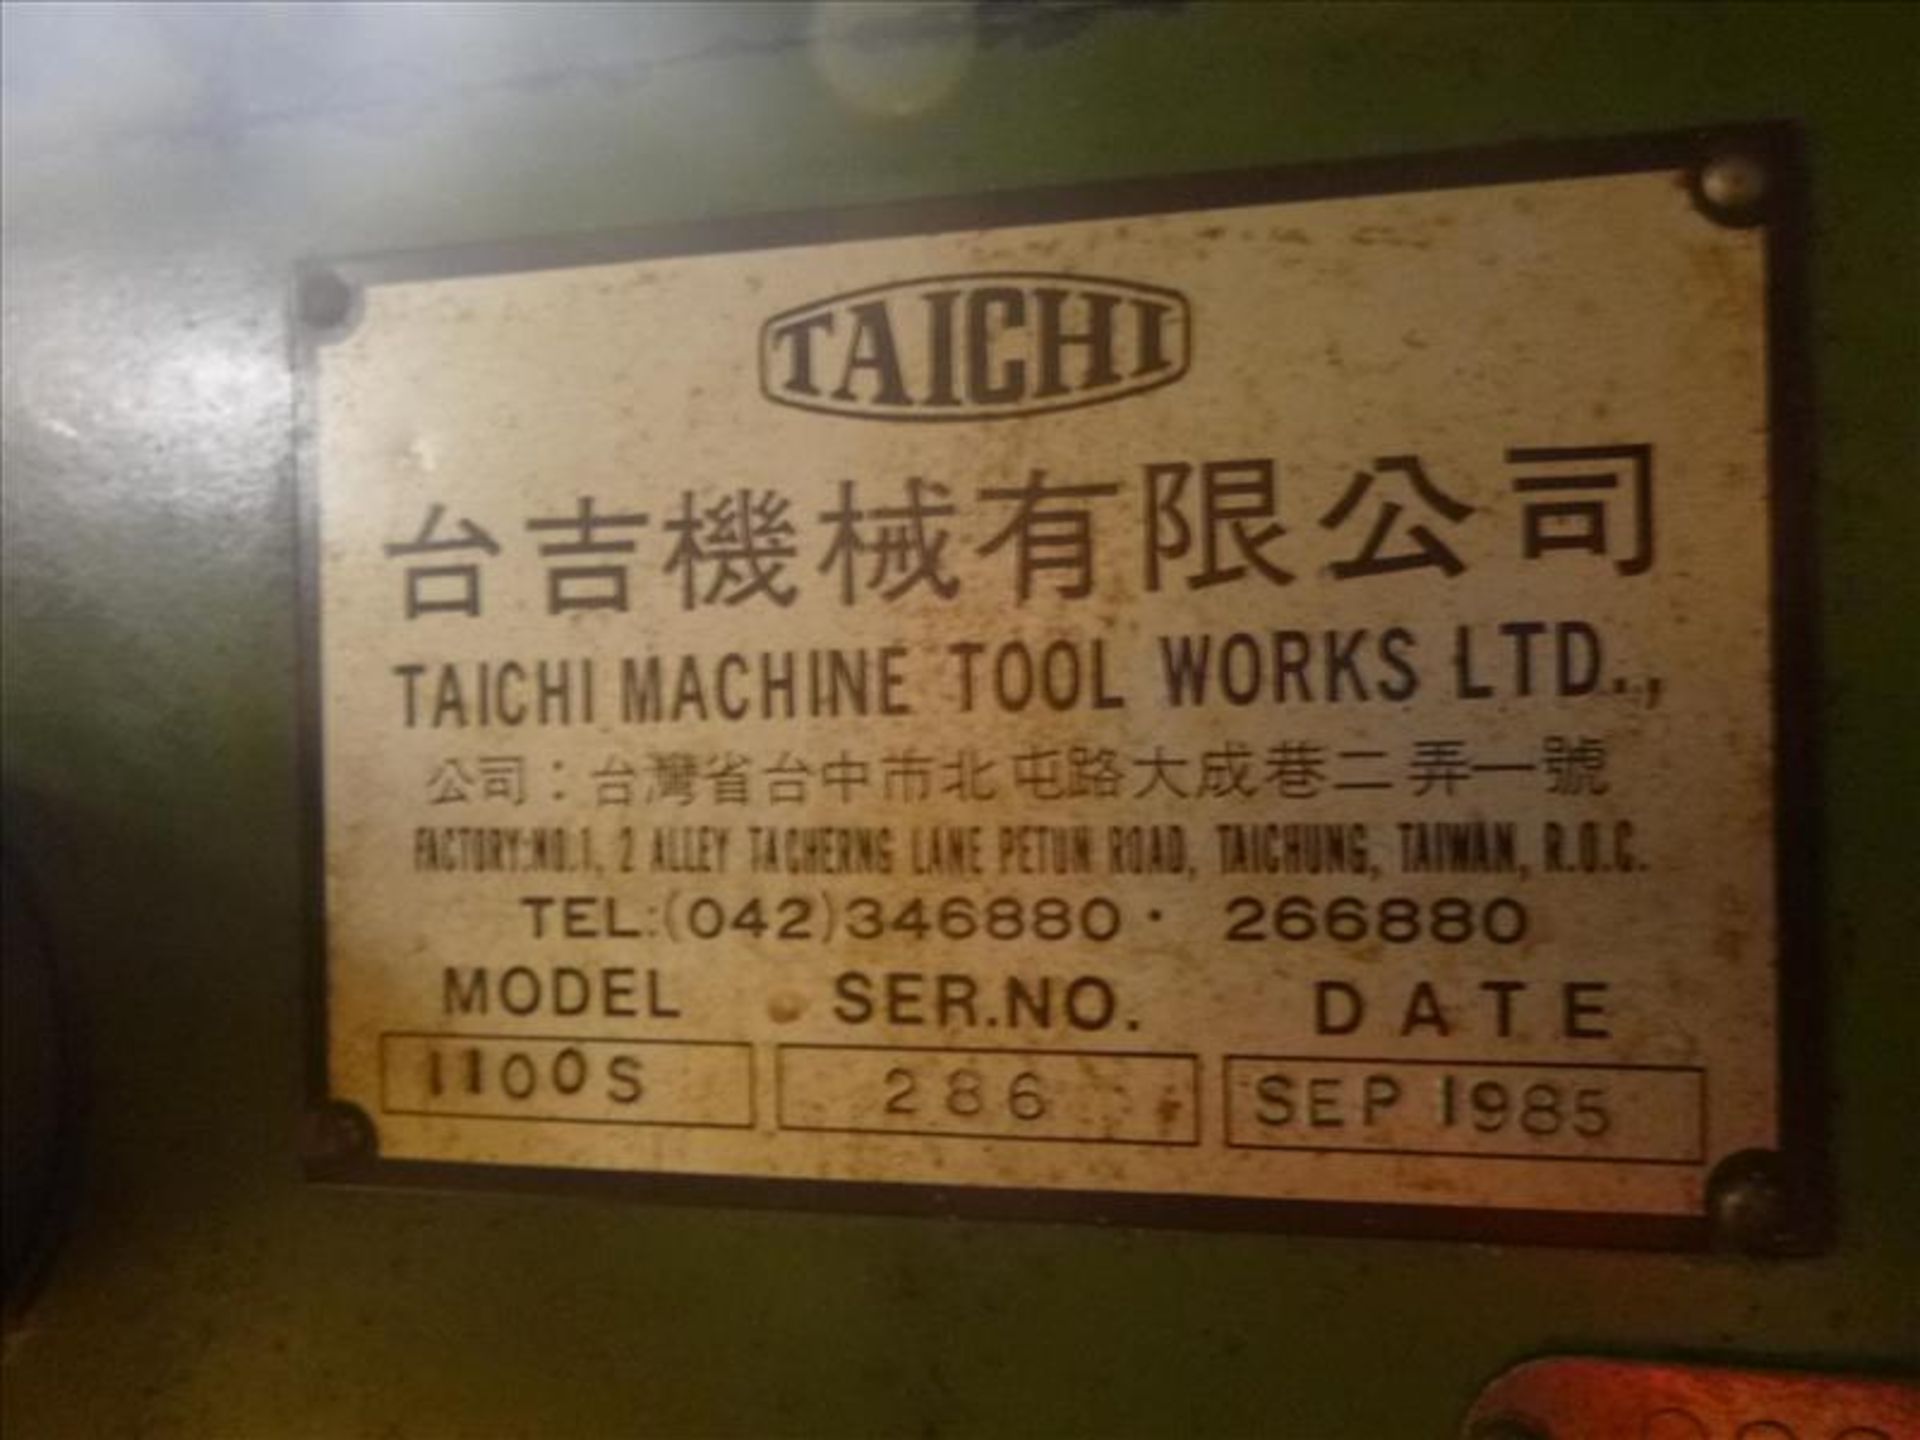 Taichi radial arm drill, mod. TC-1100S, ser. no. 286, 1511 rpm cap. [Machine Shop, 1st Floor] - Image 3 of 3